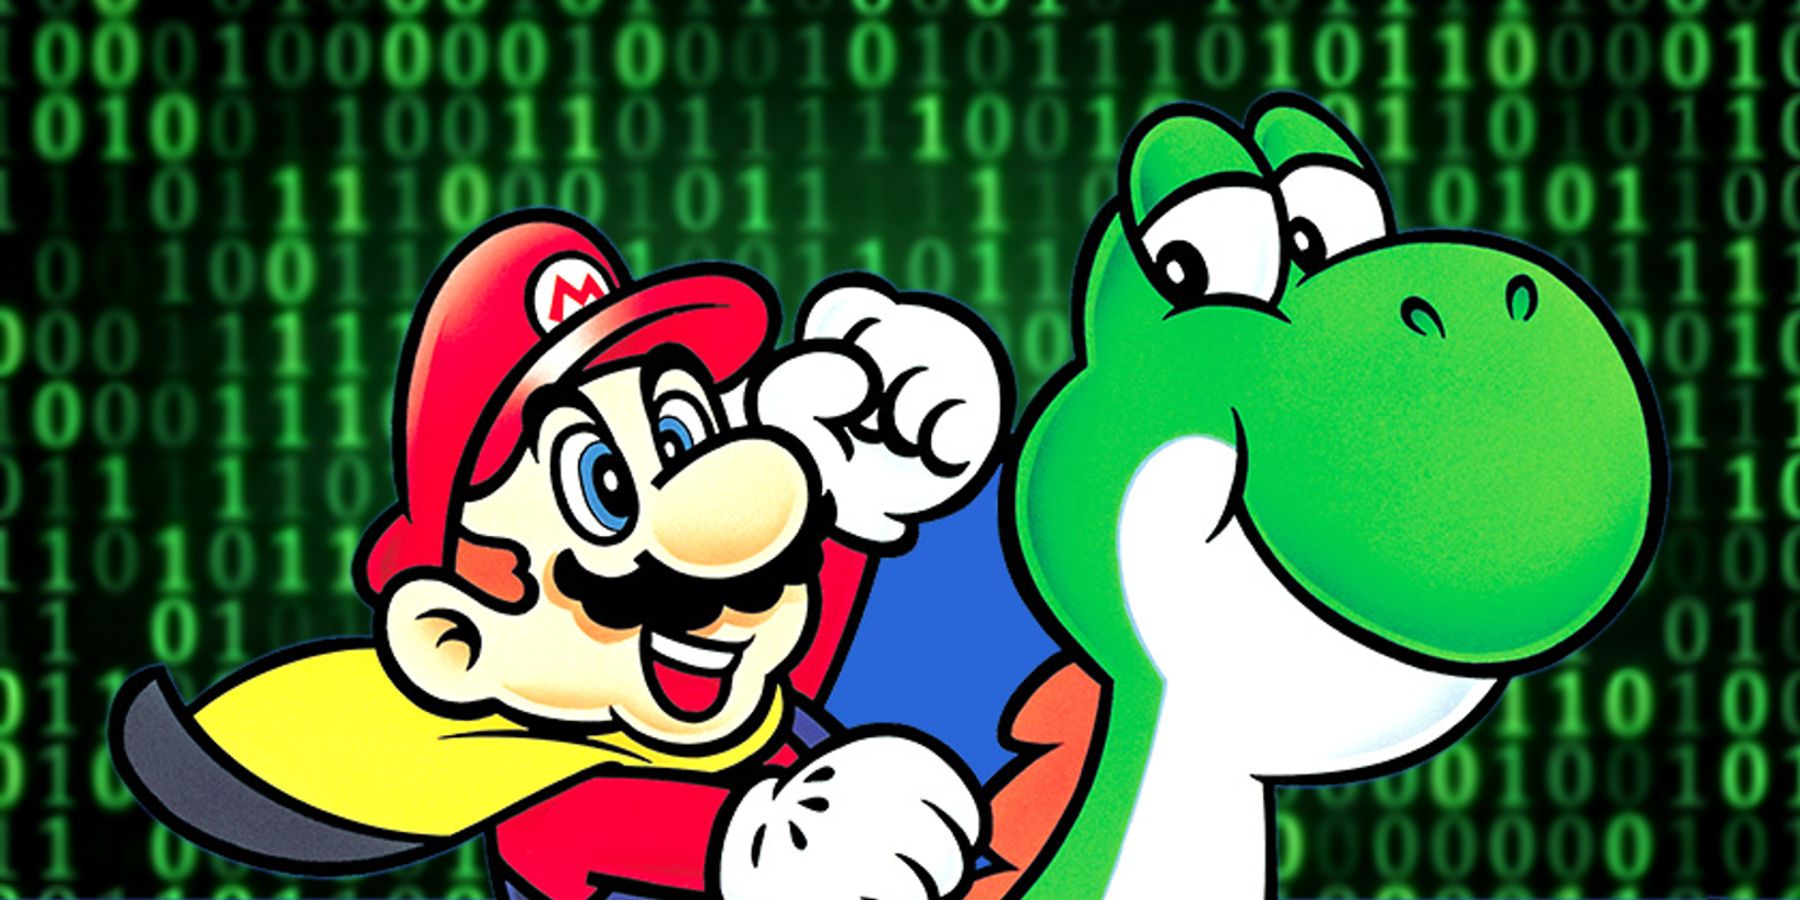 10 Best Super Mario World ROM Hacks of 2023